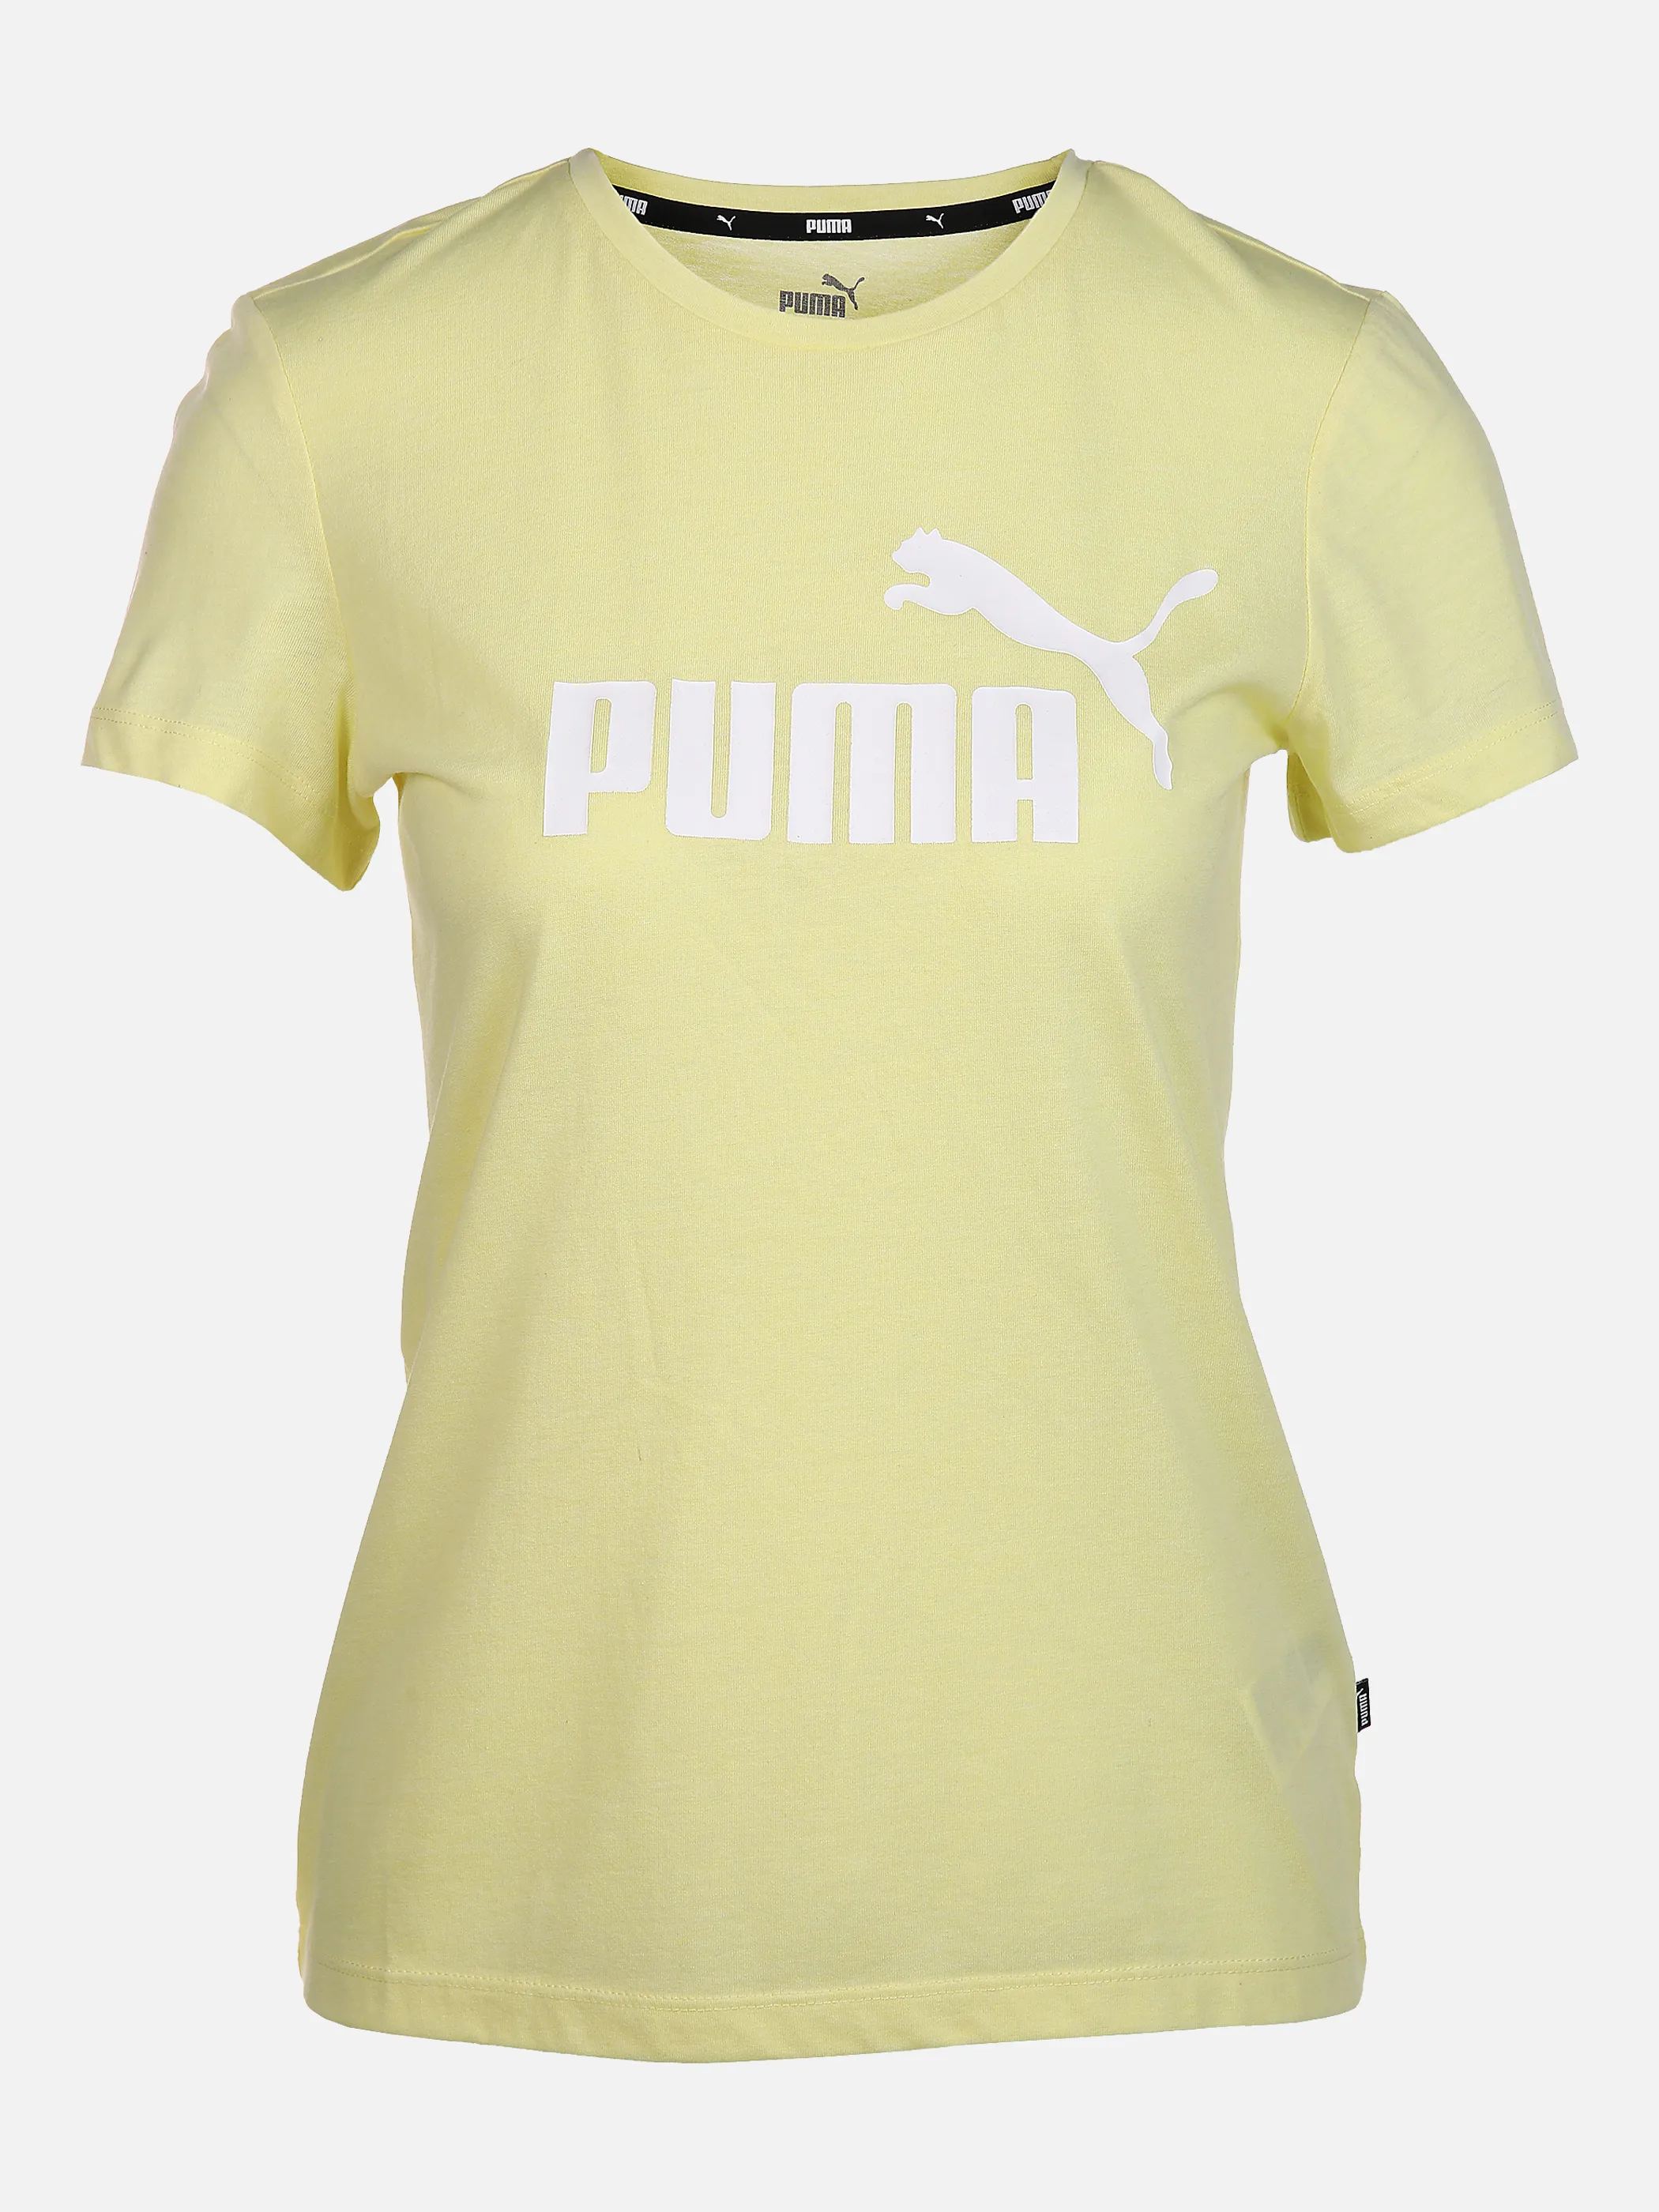 Puma 586876 Da-T-Shirt Gelb 846539 40 1